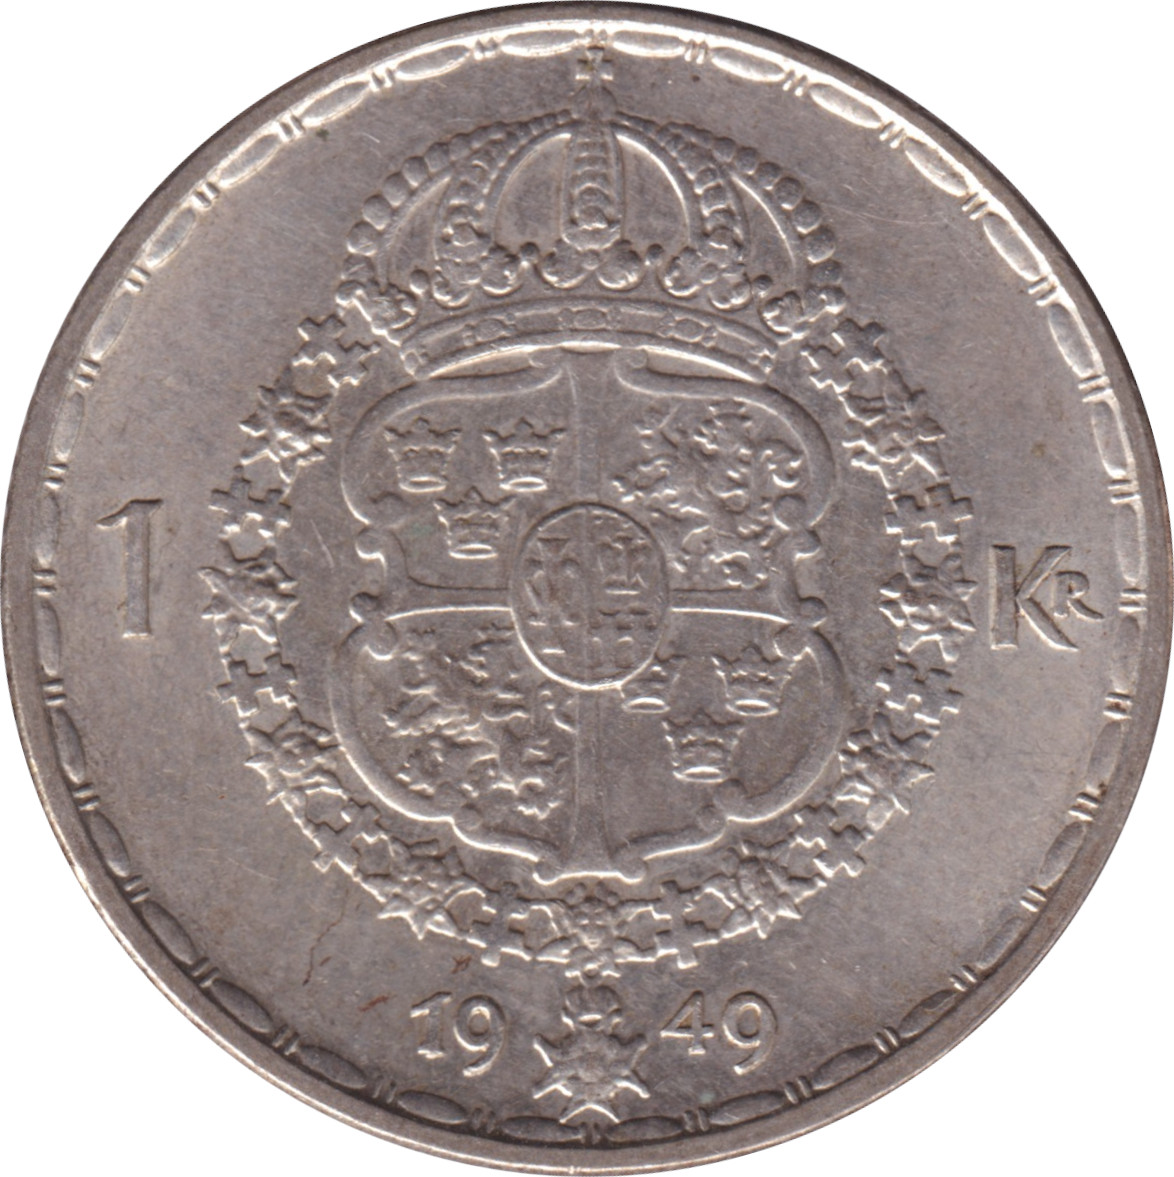 1 krona - Gustave V - Old head